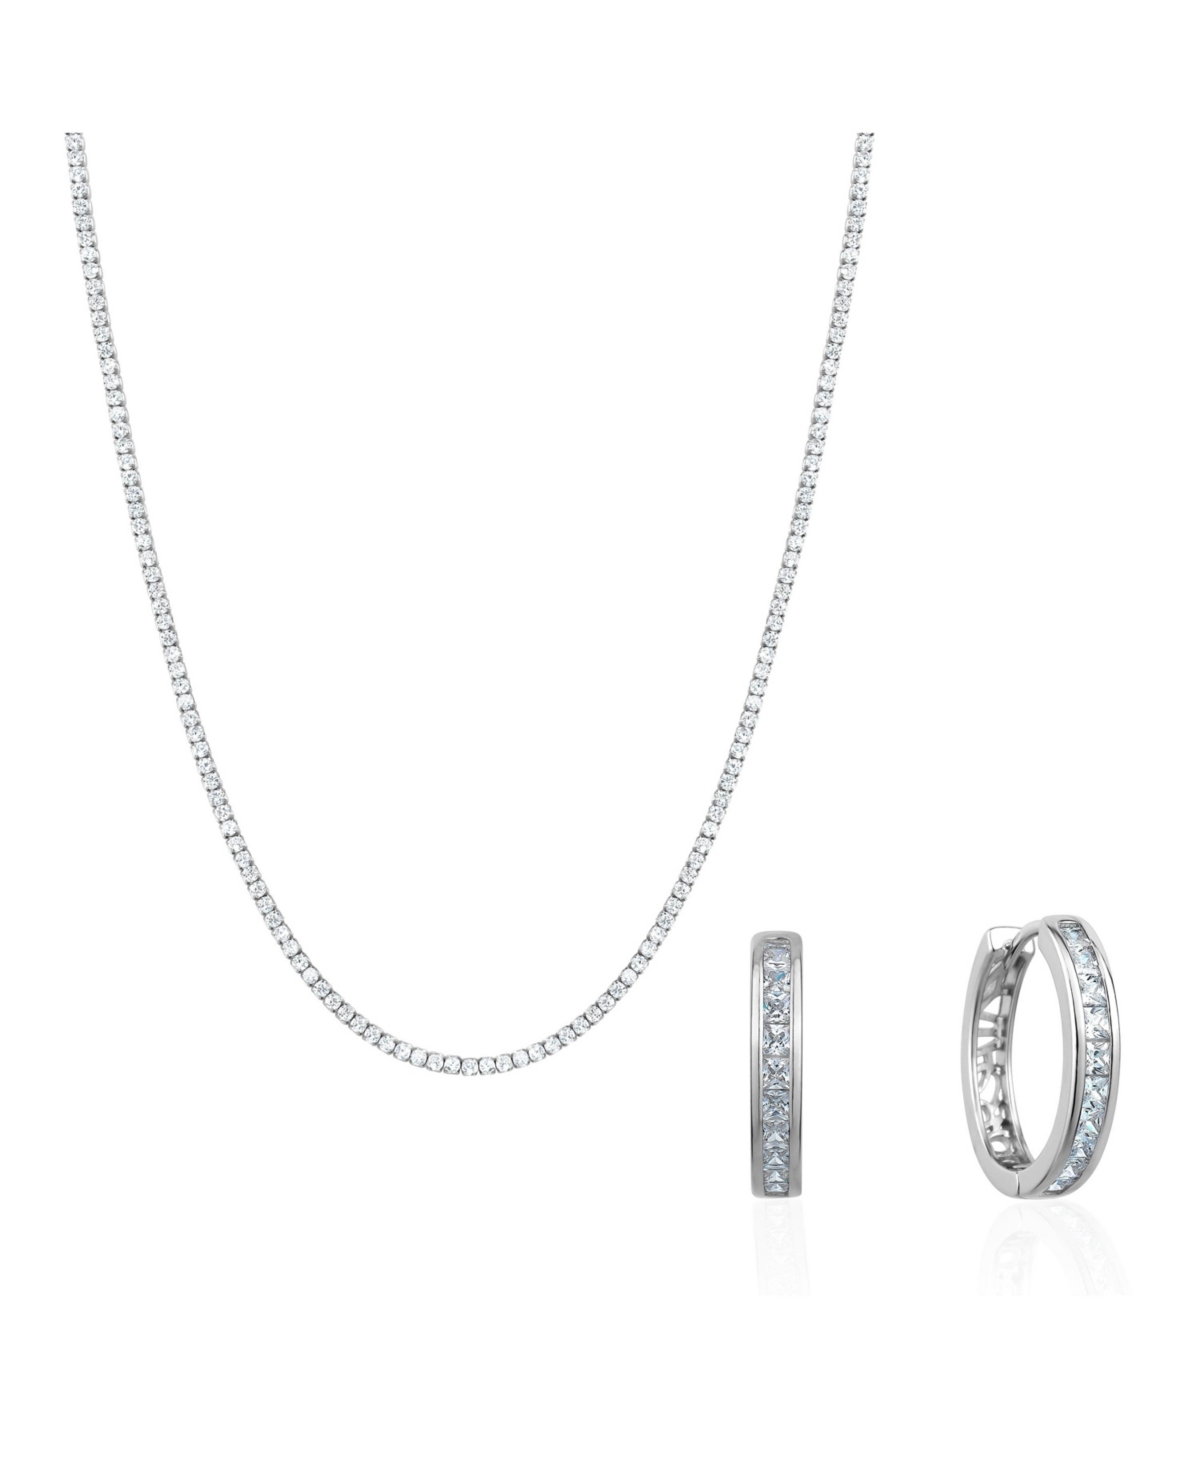 Cubic Zirconia Vintage Necklace and Loop Earrings Set - Silver